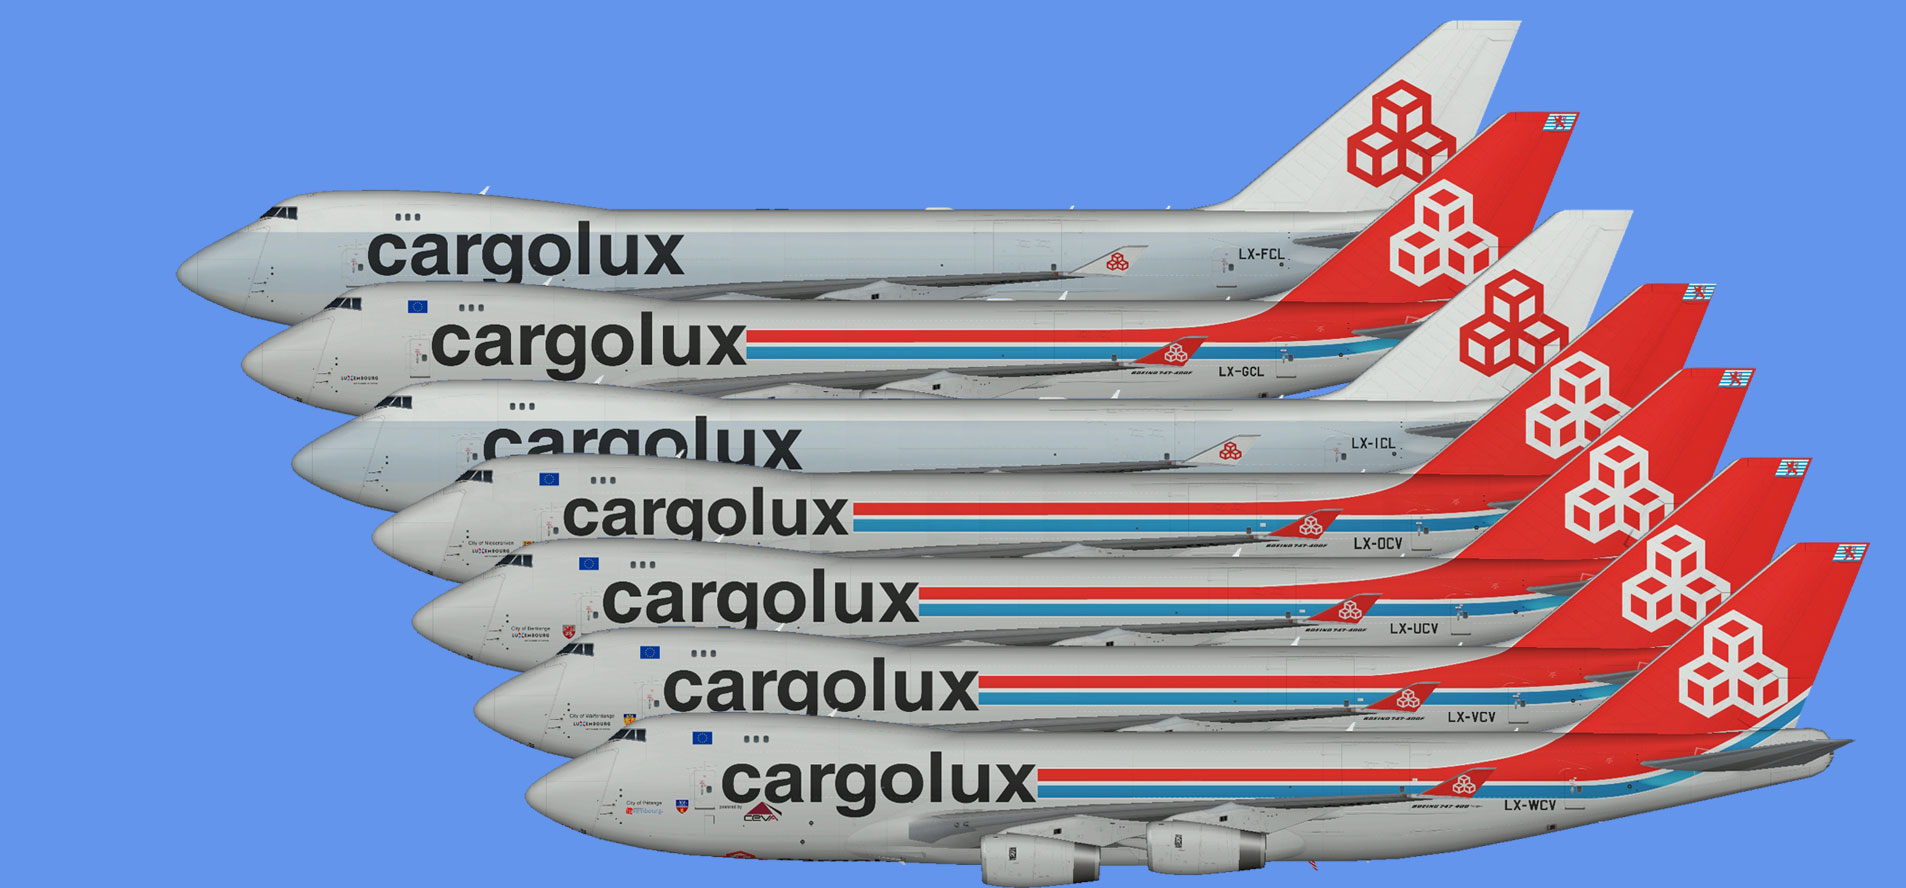 Cargolux Boeing 747-400F (RR)